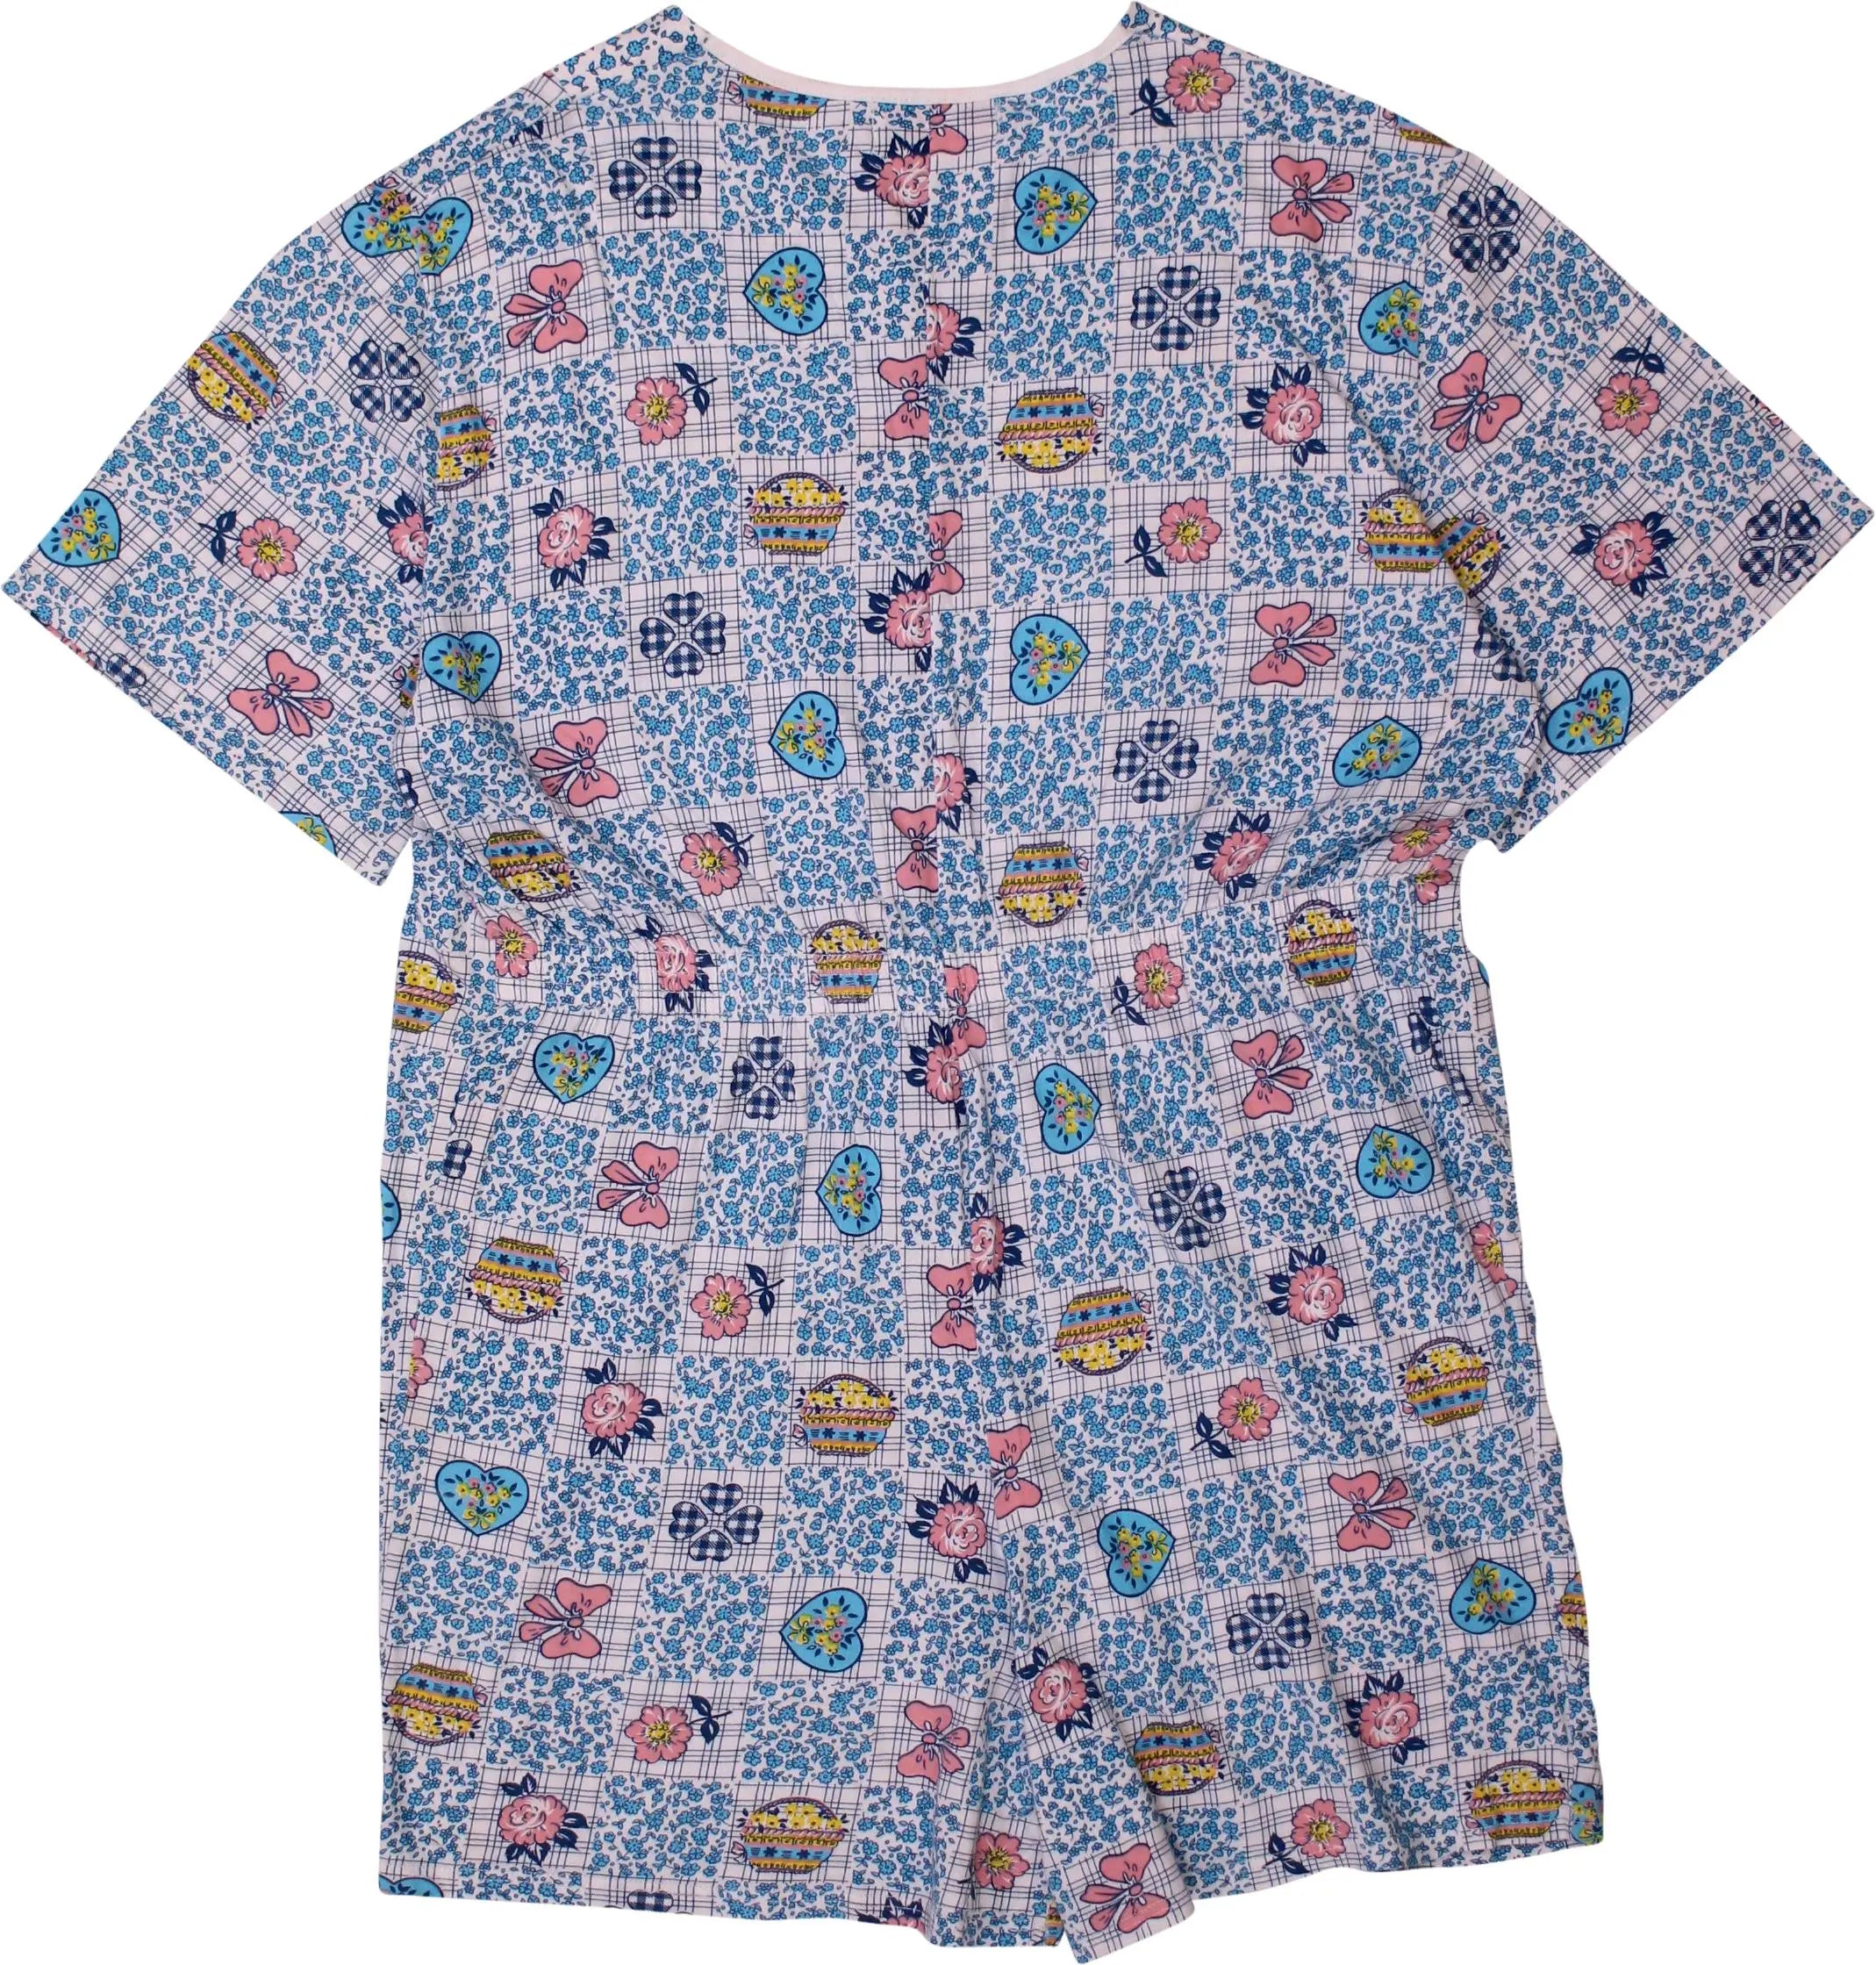 Sussurri Lingerie - 80s Floral Jumpsuit- ThriftTale.com - Vintage and second handclothing